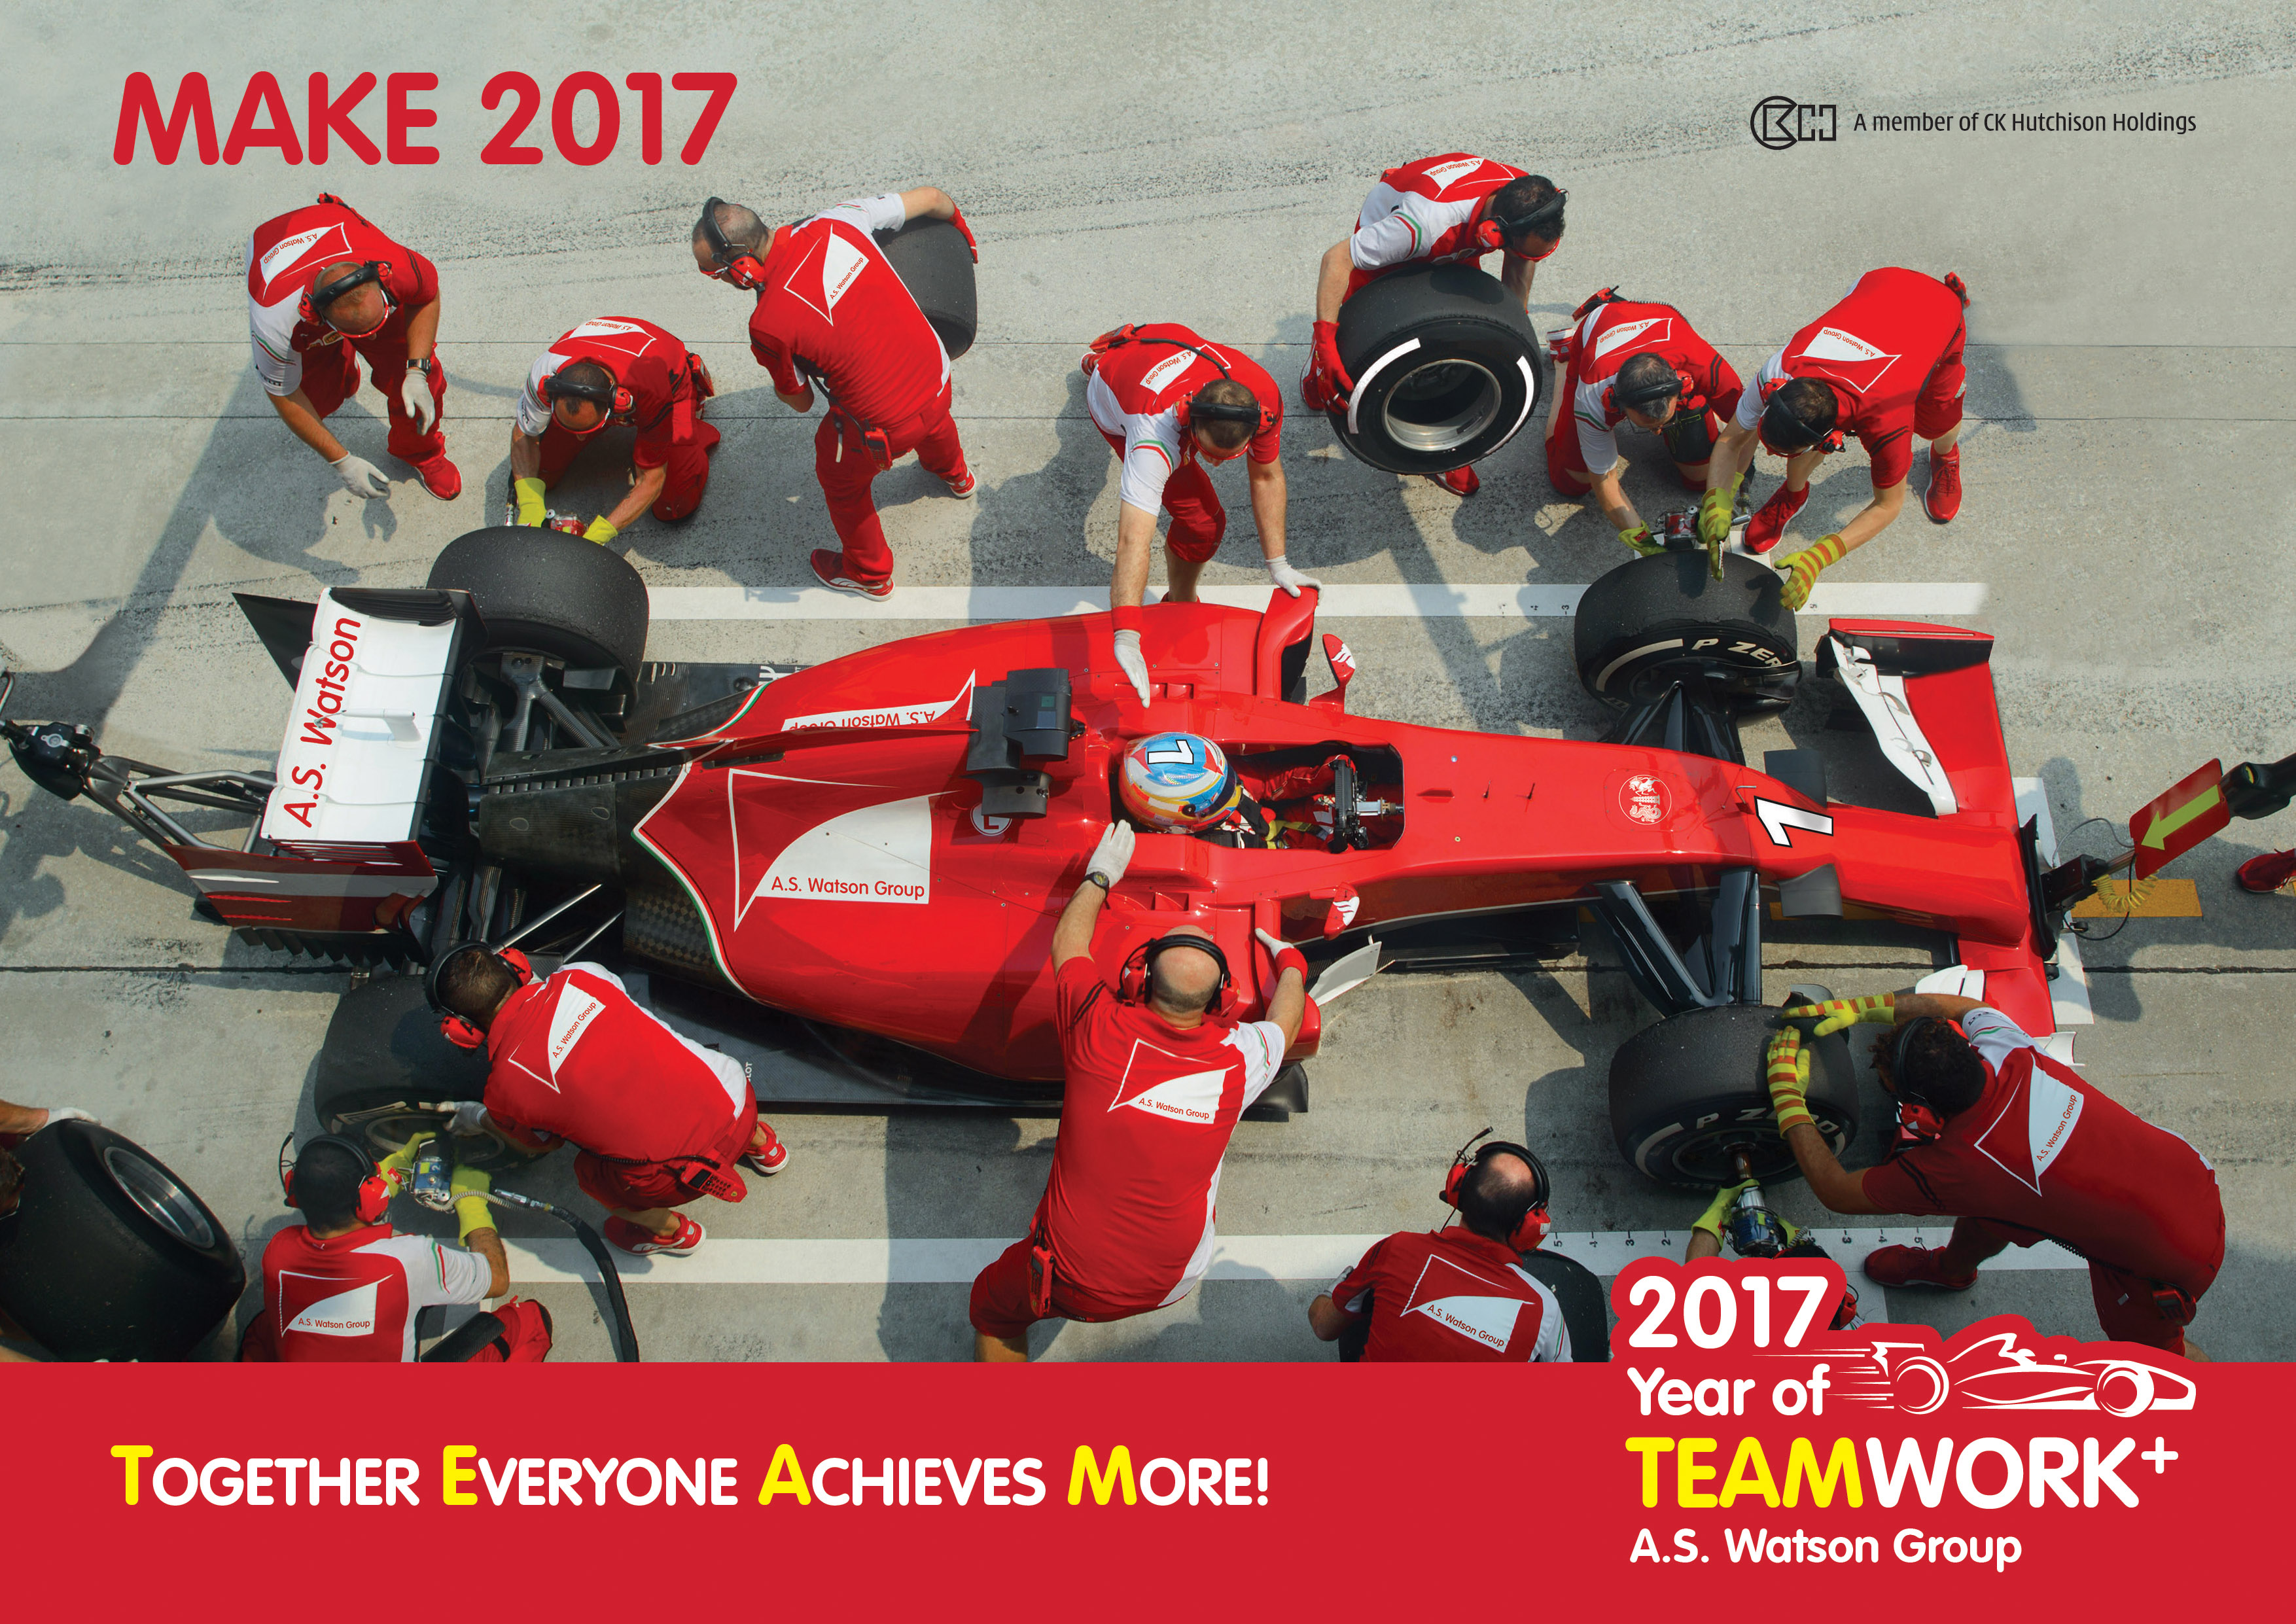 MAKE 2017 Theme As "Year of Teamwork"